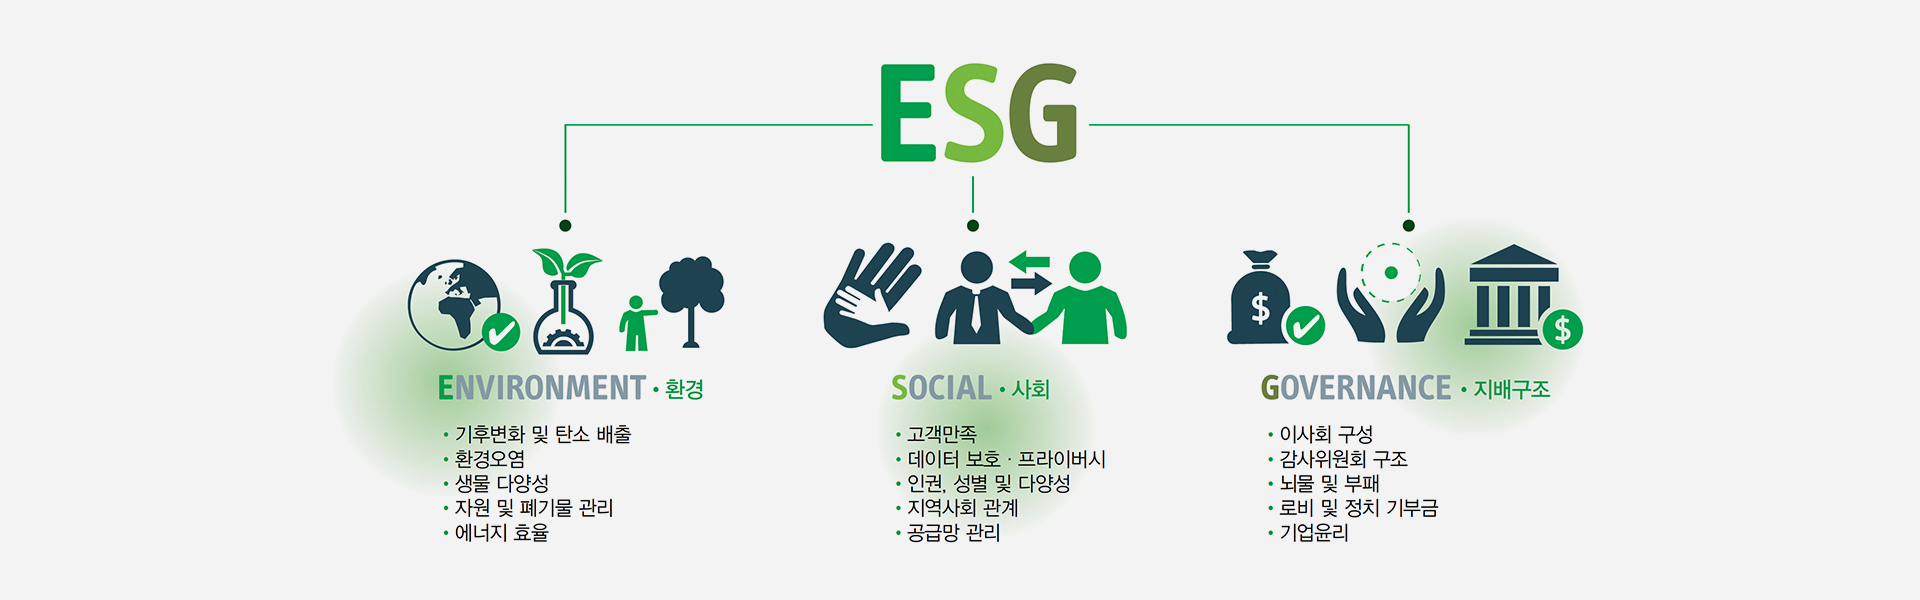 ESG란 무엇인가